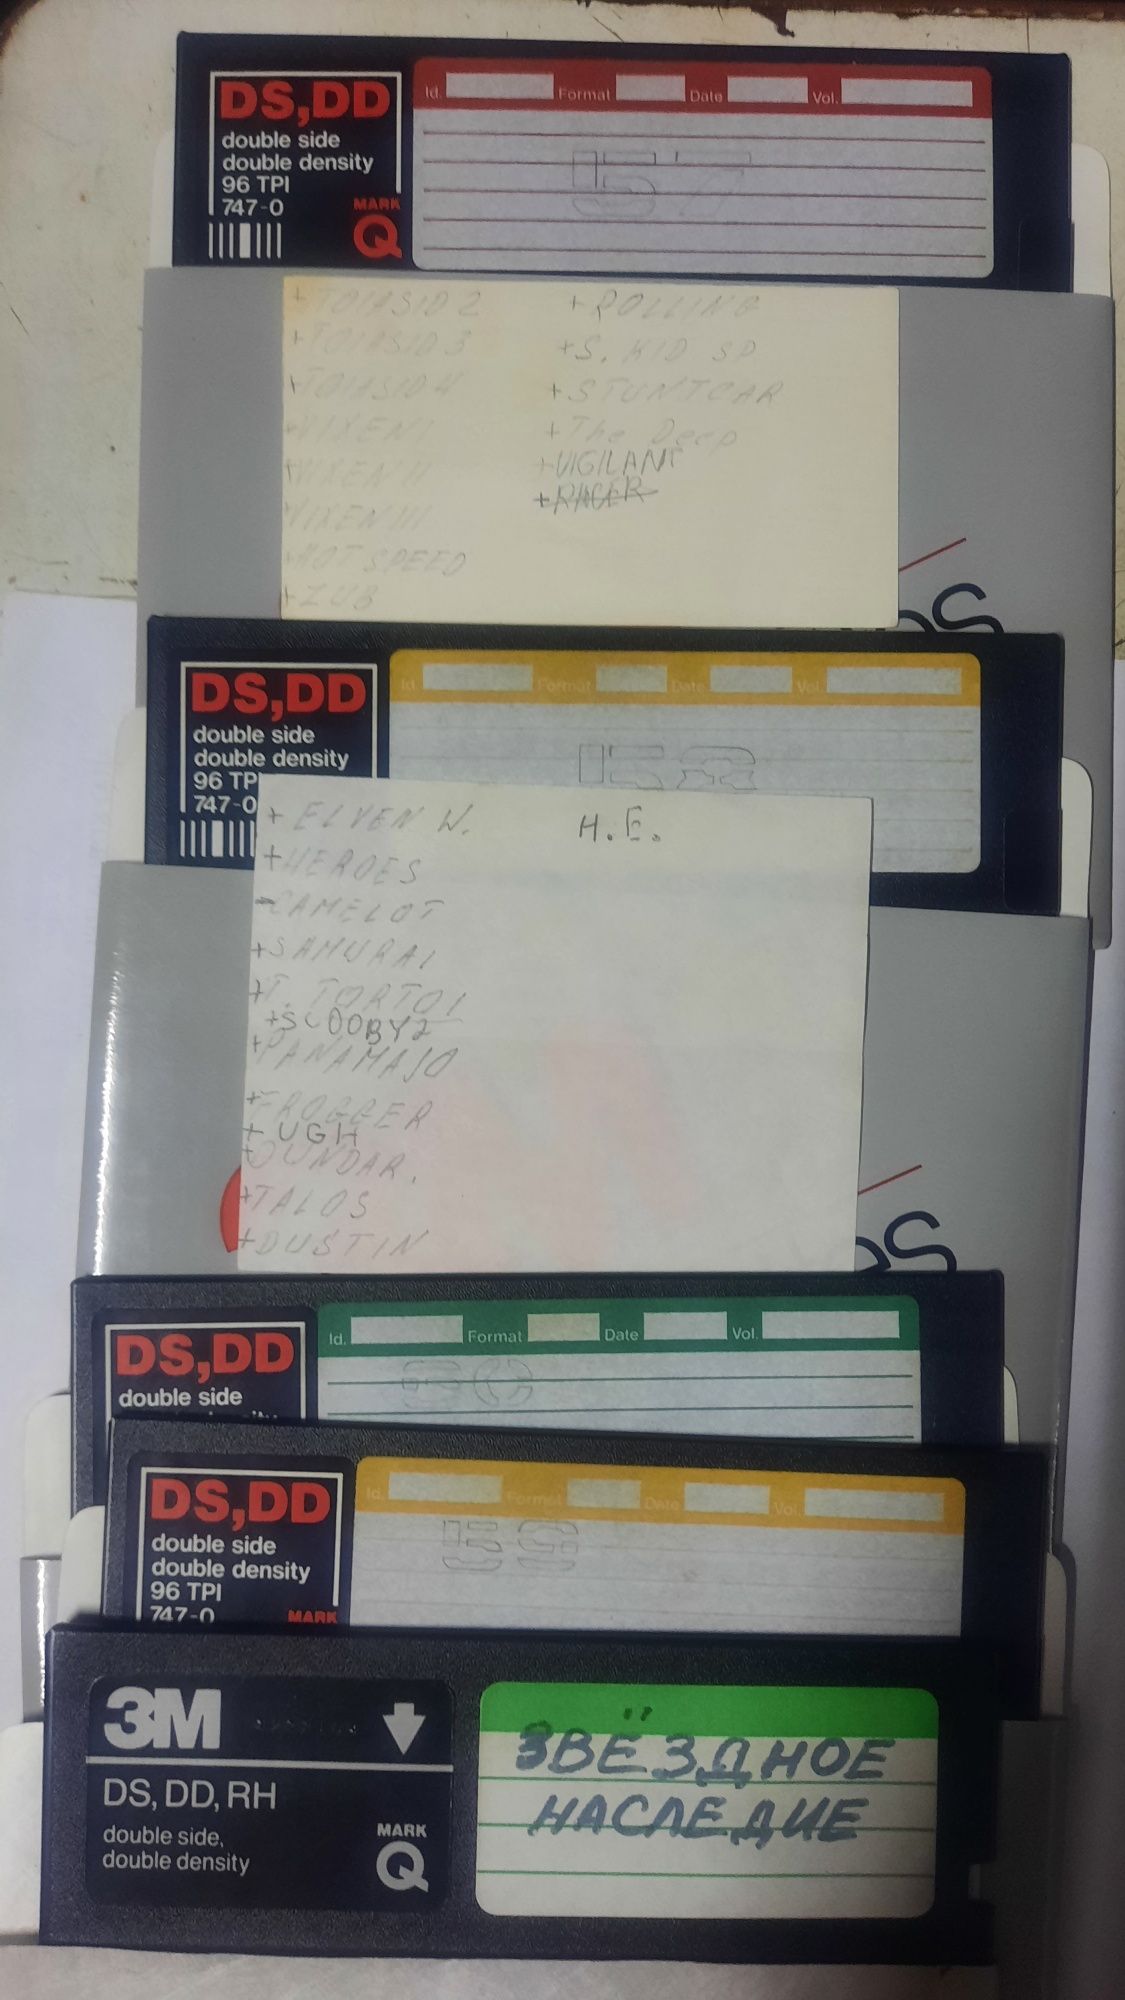 ZX Spectrum игры на кассетах и дискетах 5'25